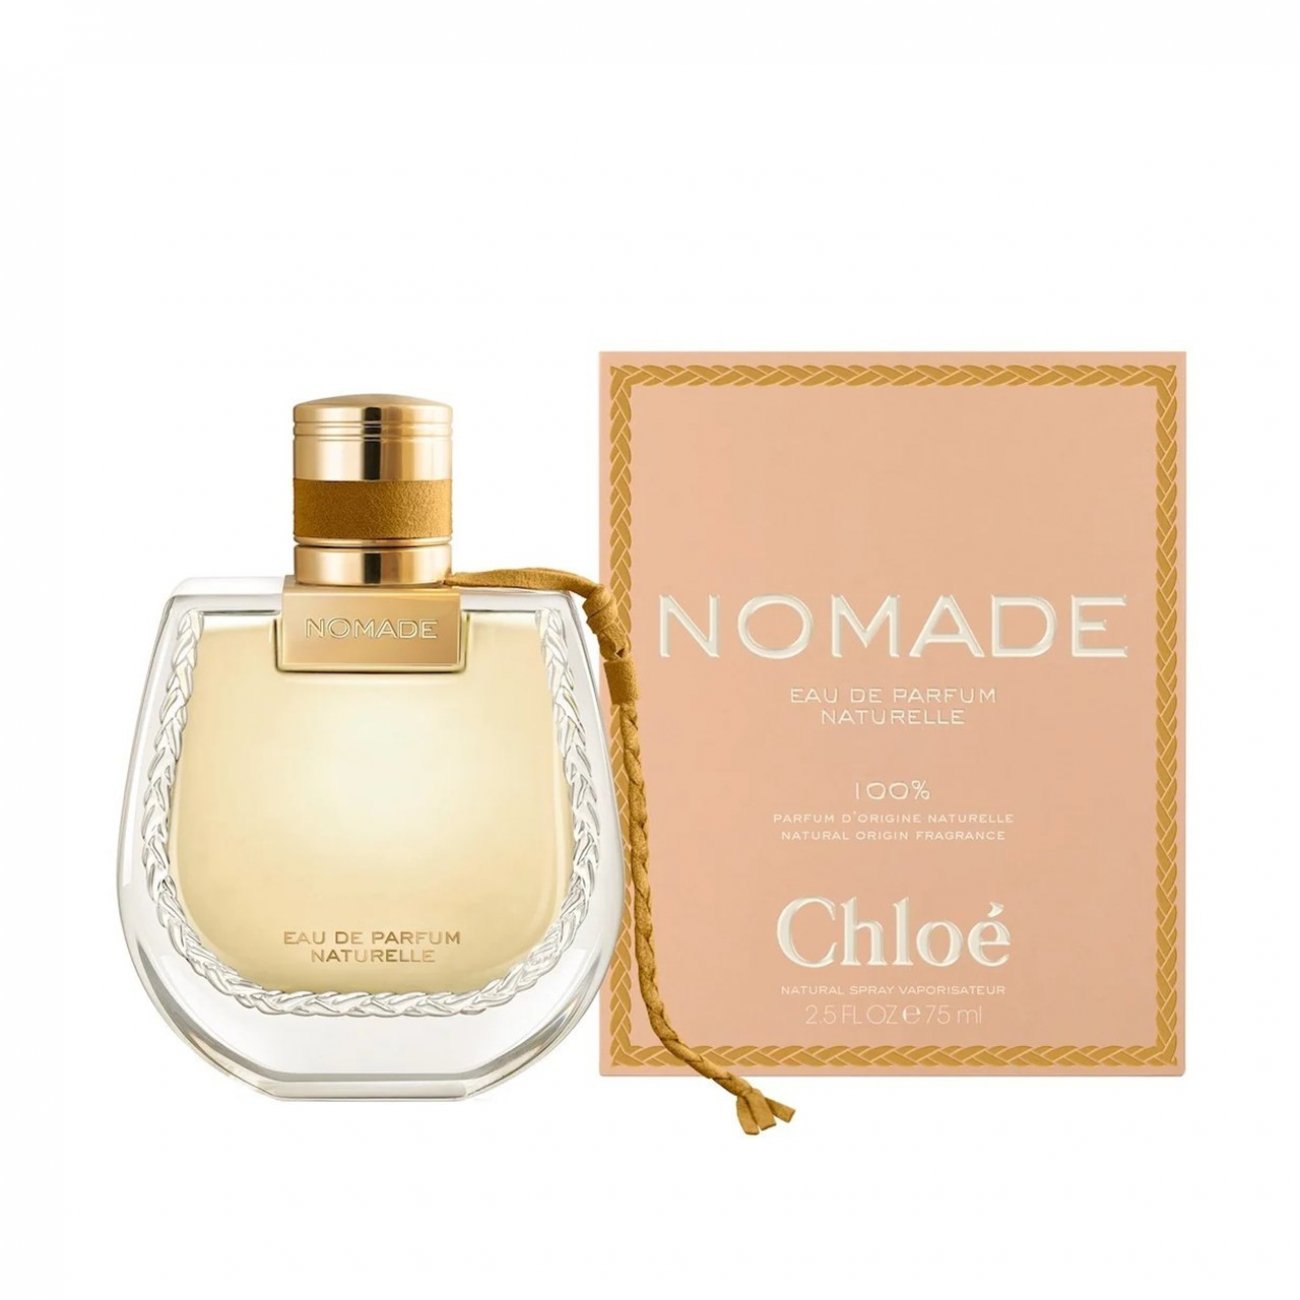 Chloe Nomade Perfume